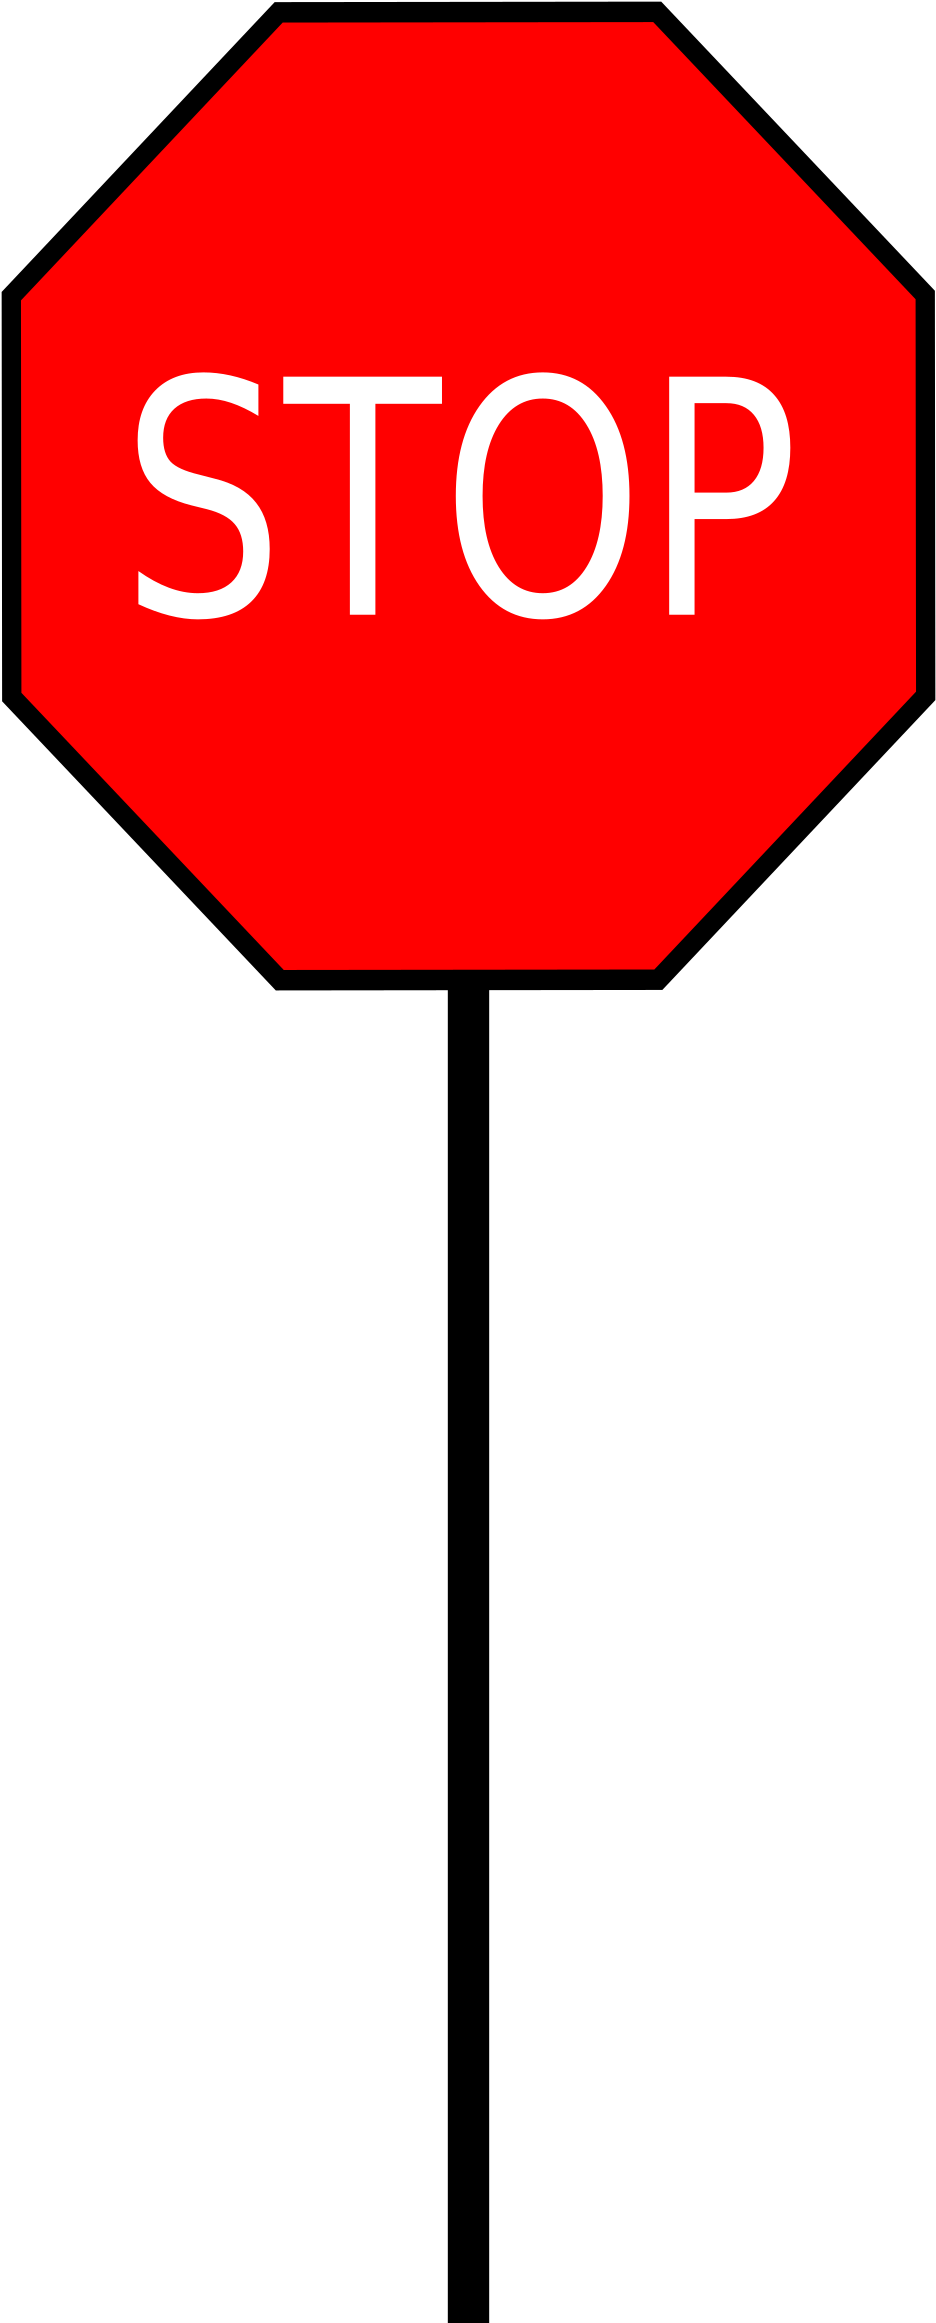 Signal 3 - Semáforo Stop (1697x2400)